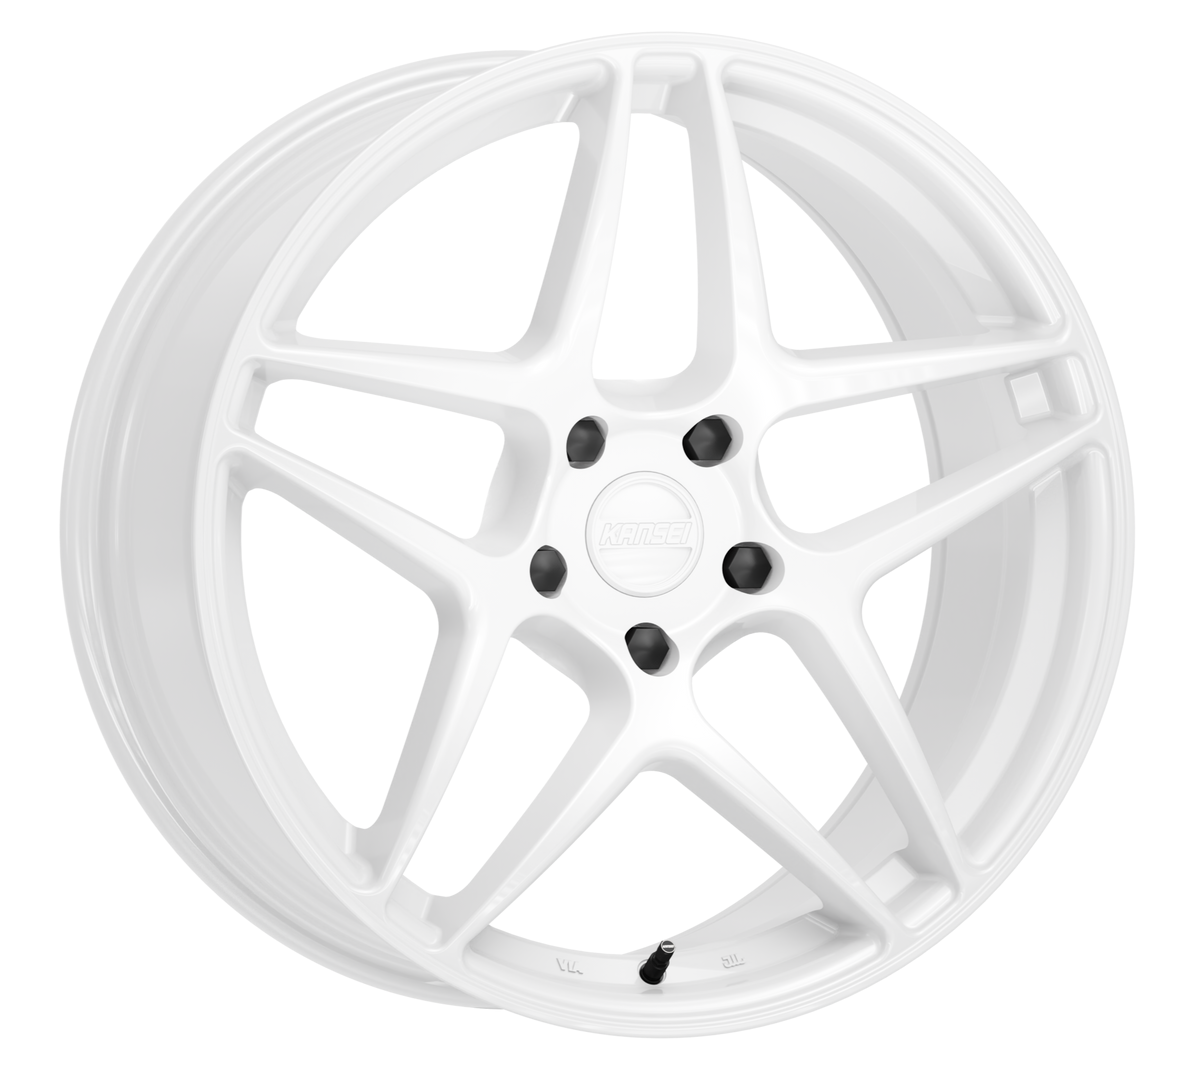 K15W ASTRO Wheel, Size: 19" x 9.50", Bolt Pattern: 5 x 114.300 mm, Backspace: 5.72" [Finish: Gloss White]